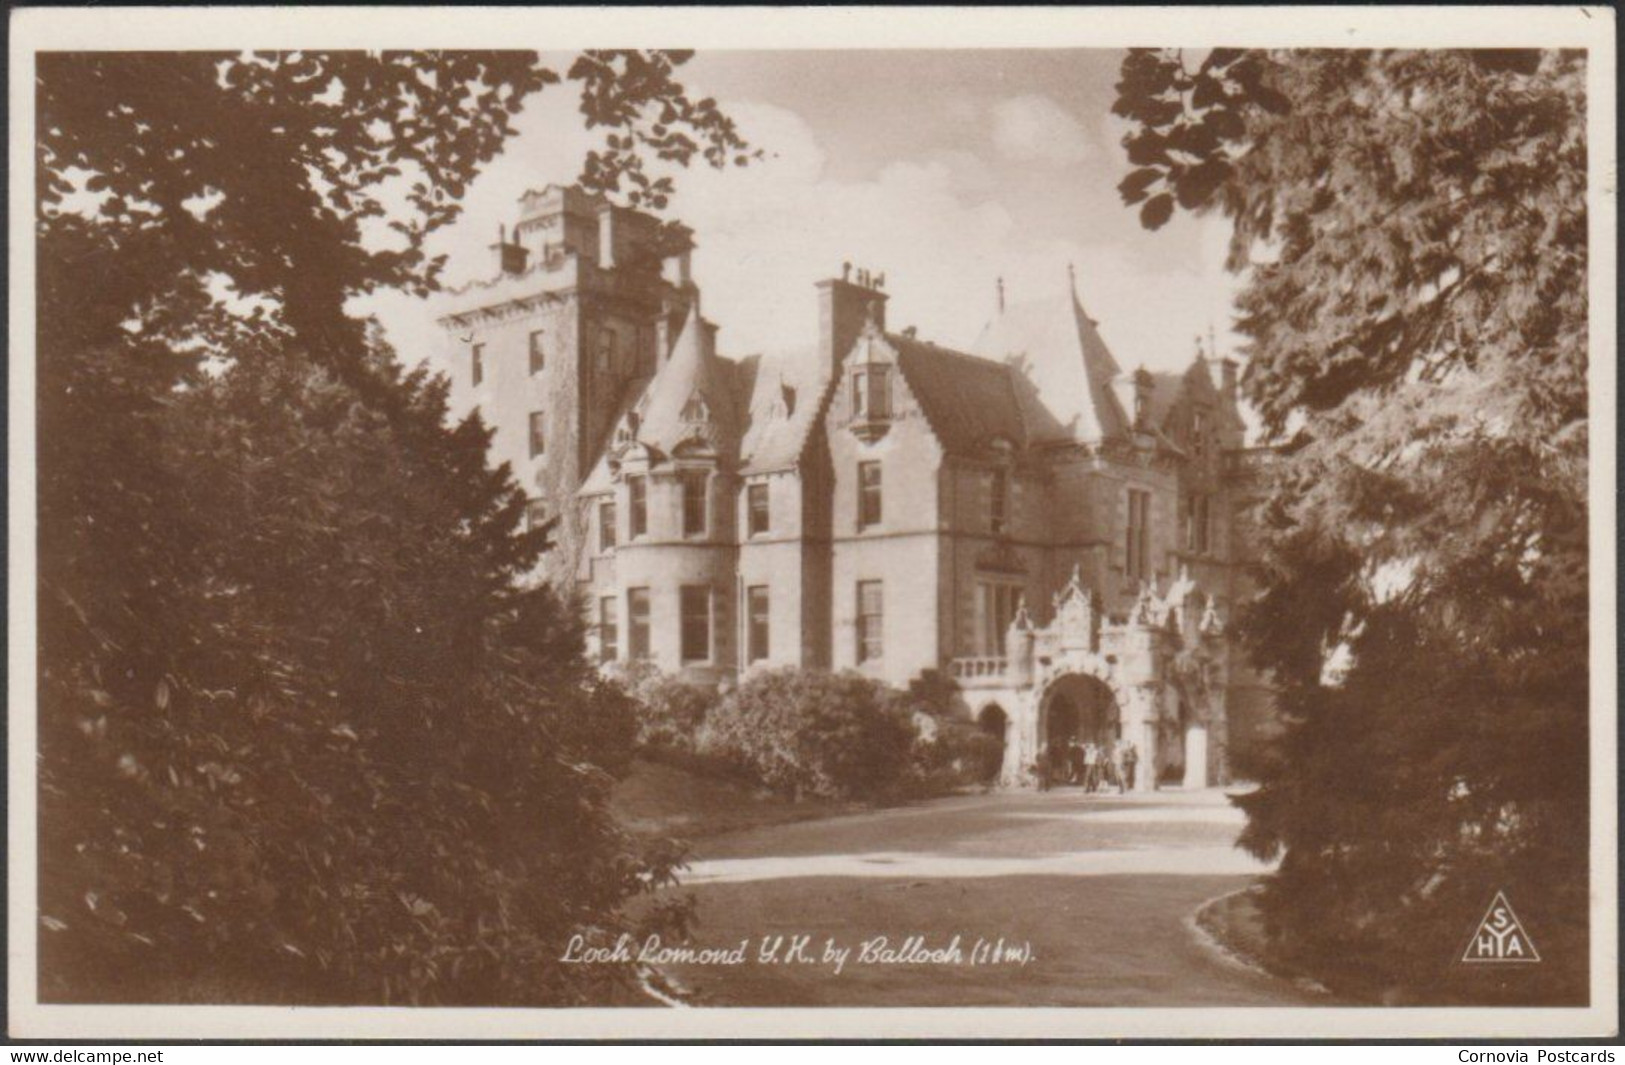 Loch Lomond Youth Hostel By Balloch, Dunbartonshire, C.1930s - SYHA RP Postcard - Dunbartonshire